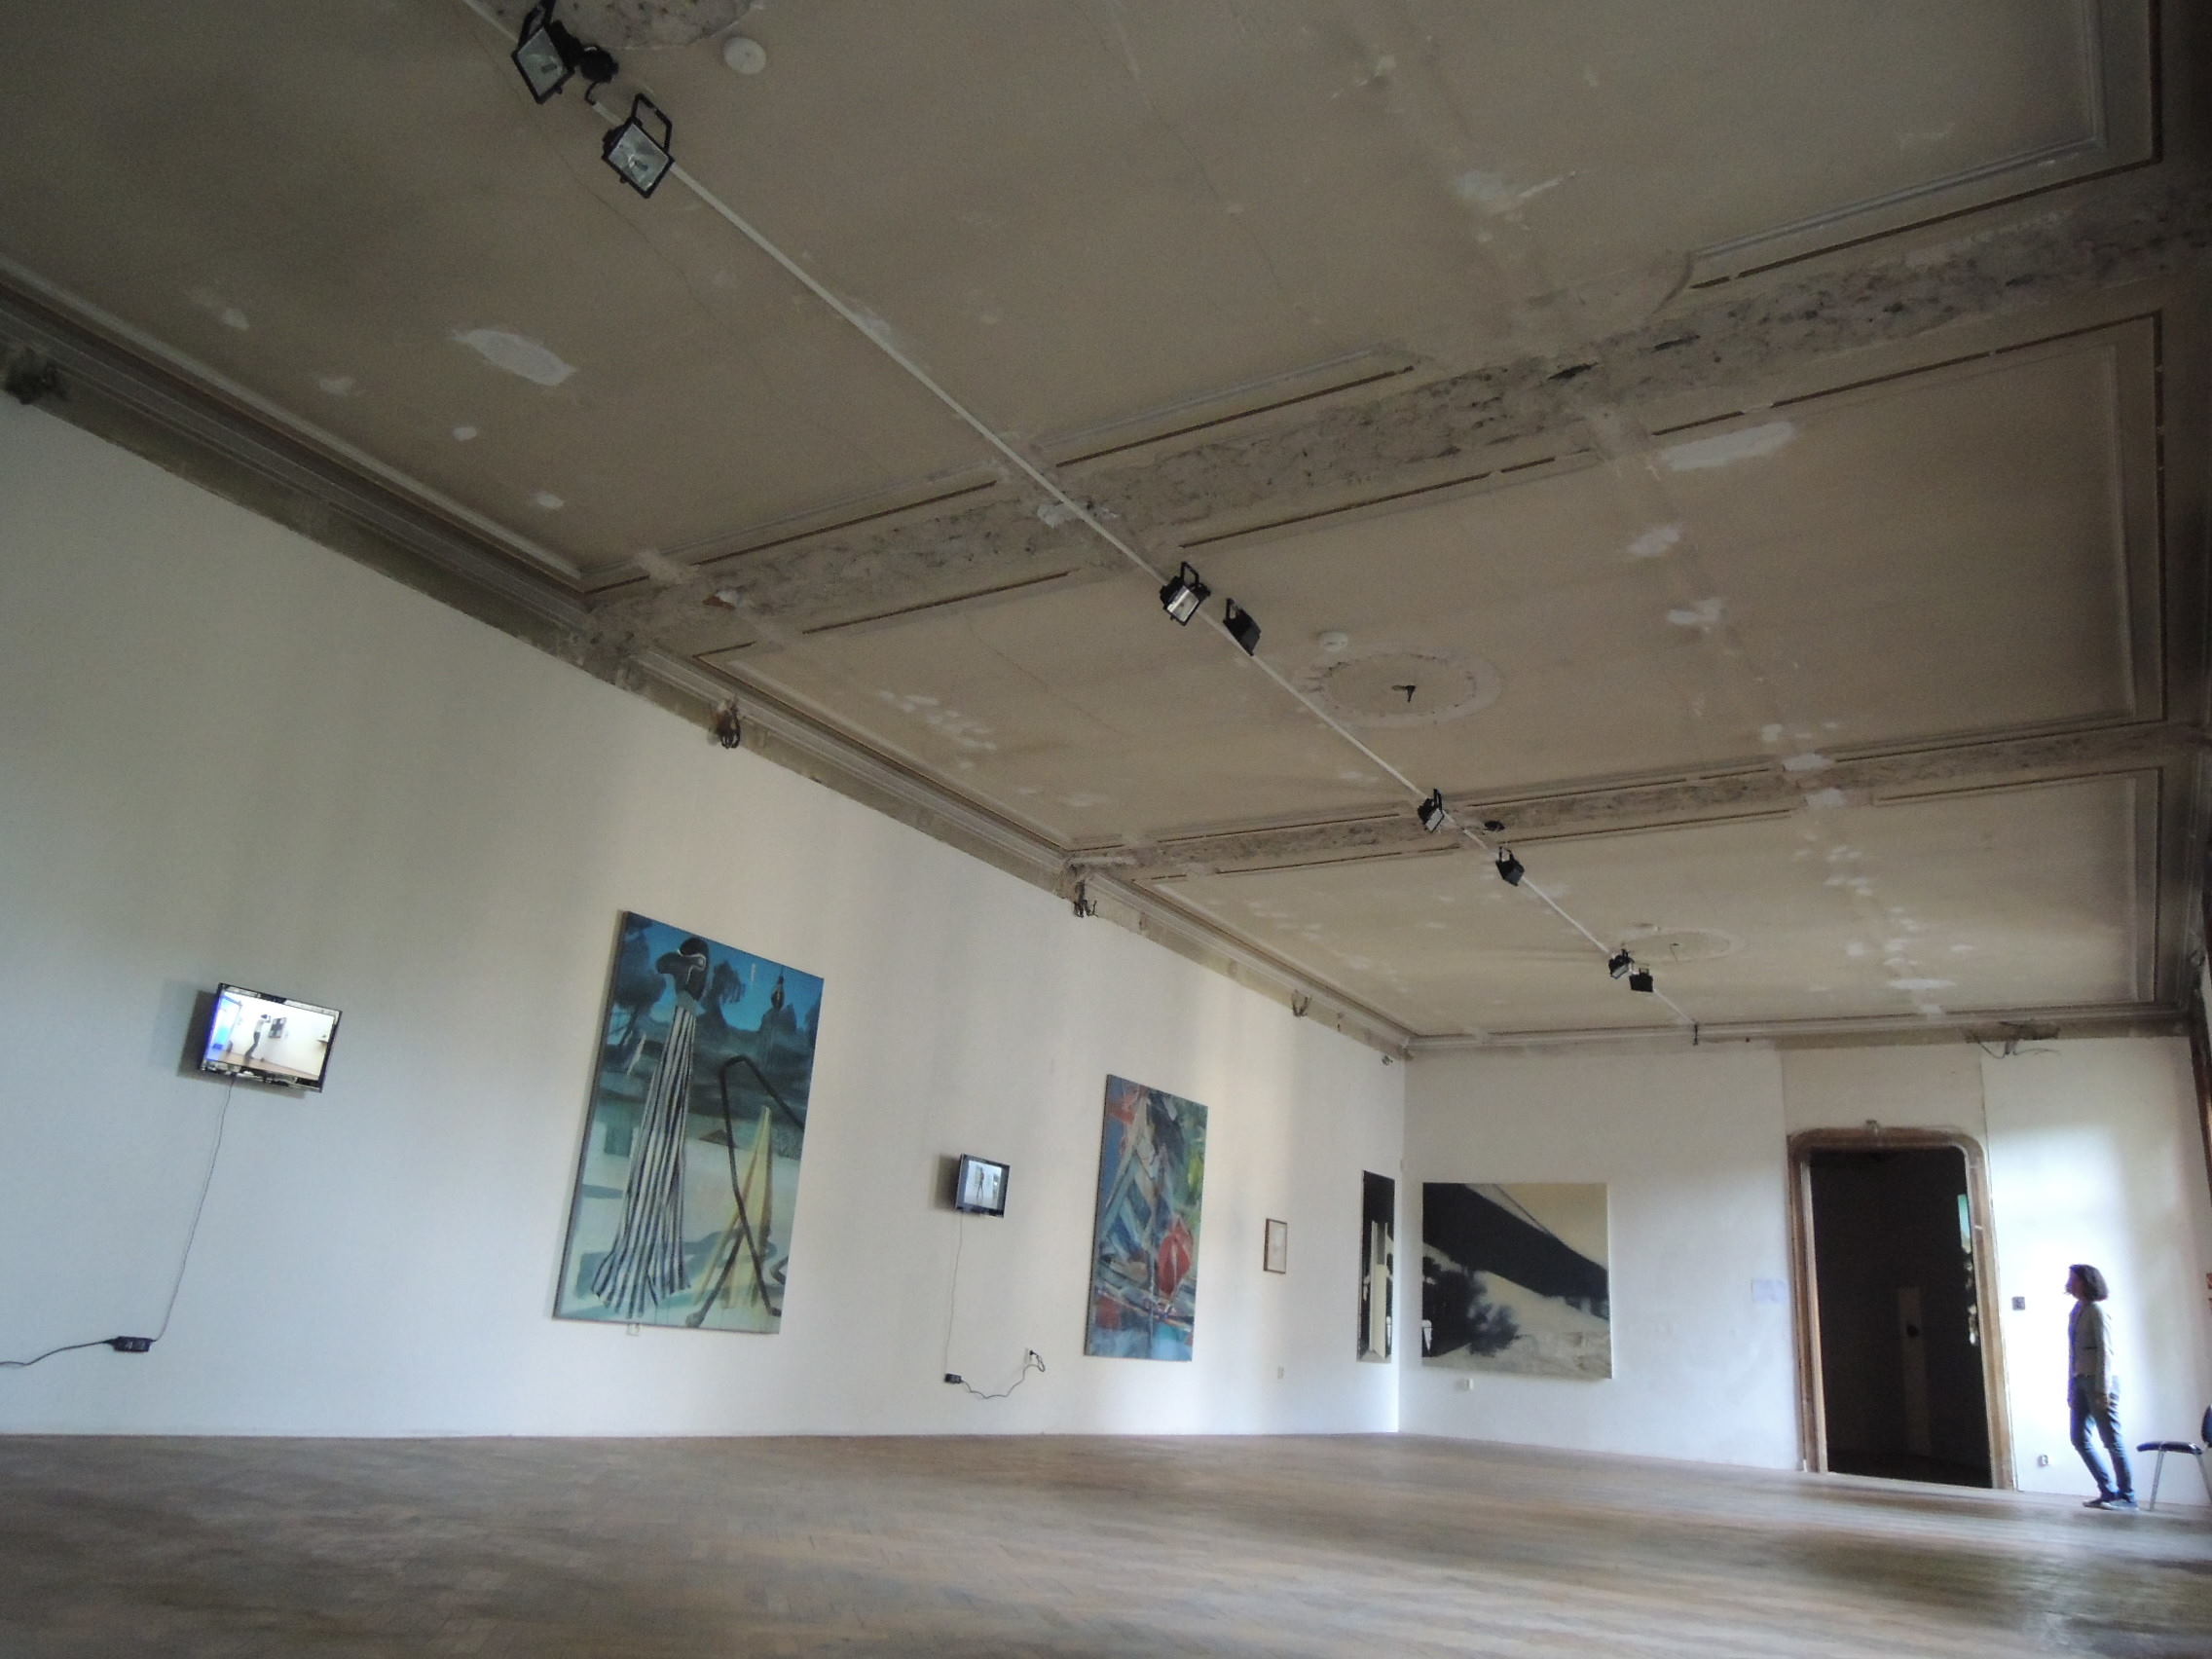   La Belle Peinture 2 , Bratislava (SK), Pisztory Palace.&nbsp;Curators : Eva Hober and Ivan Jançar 